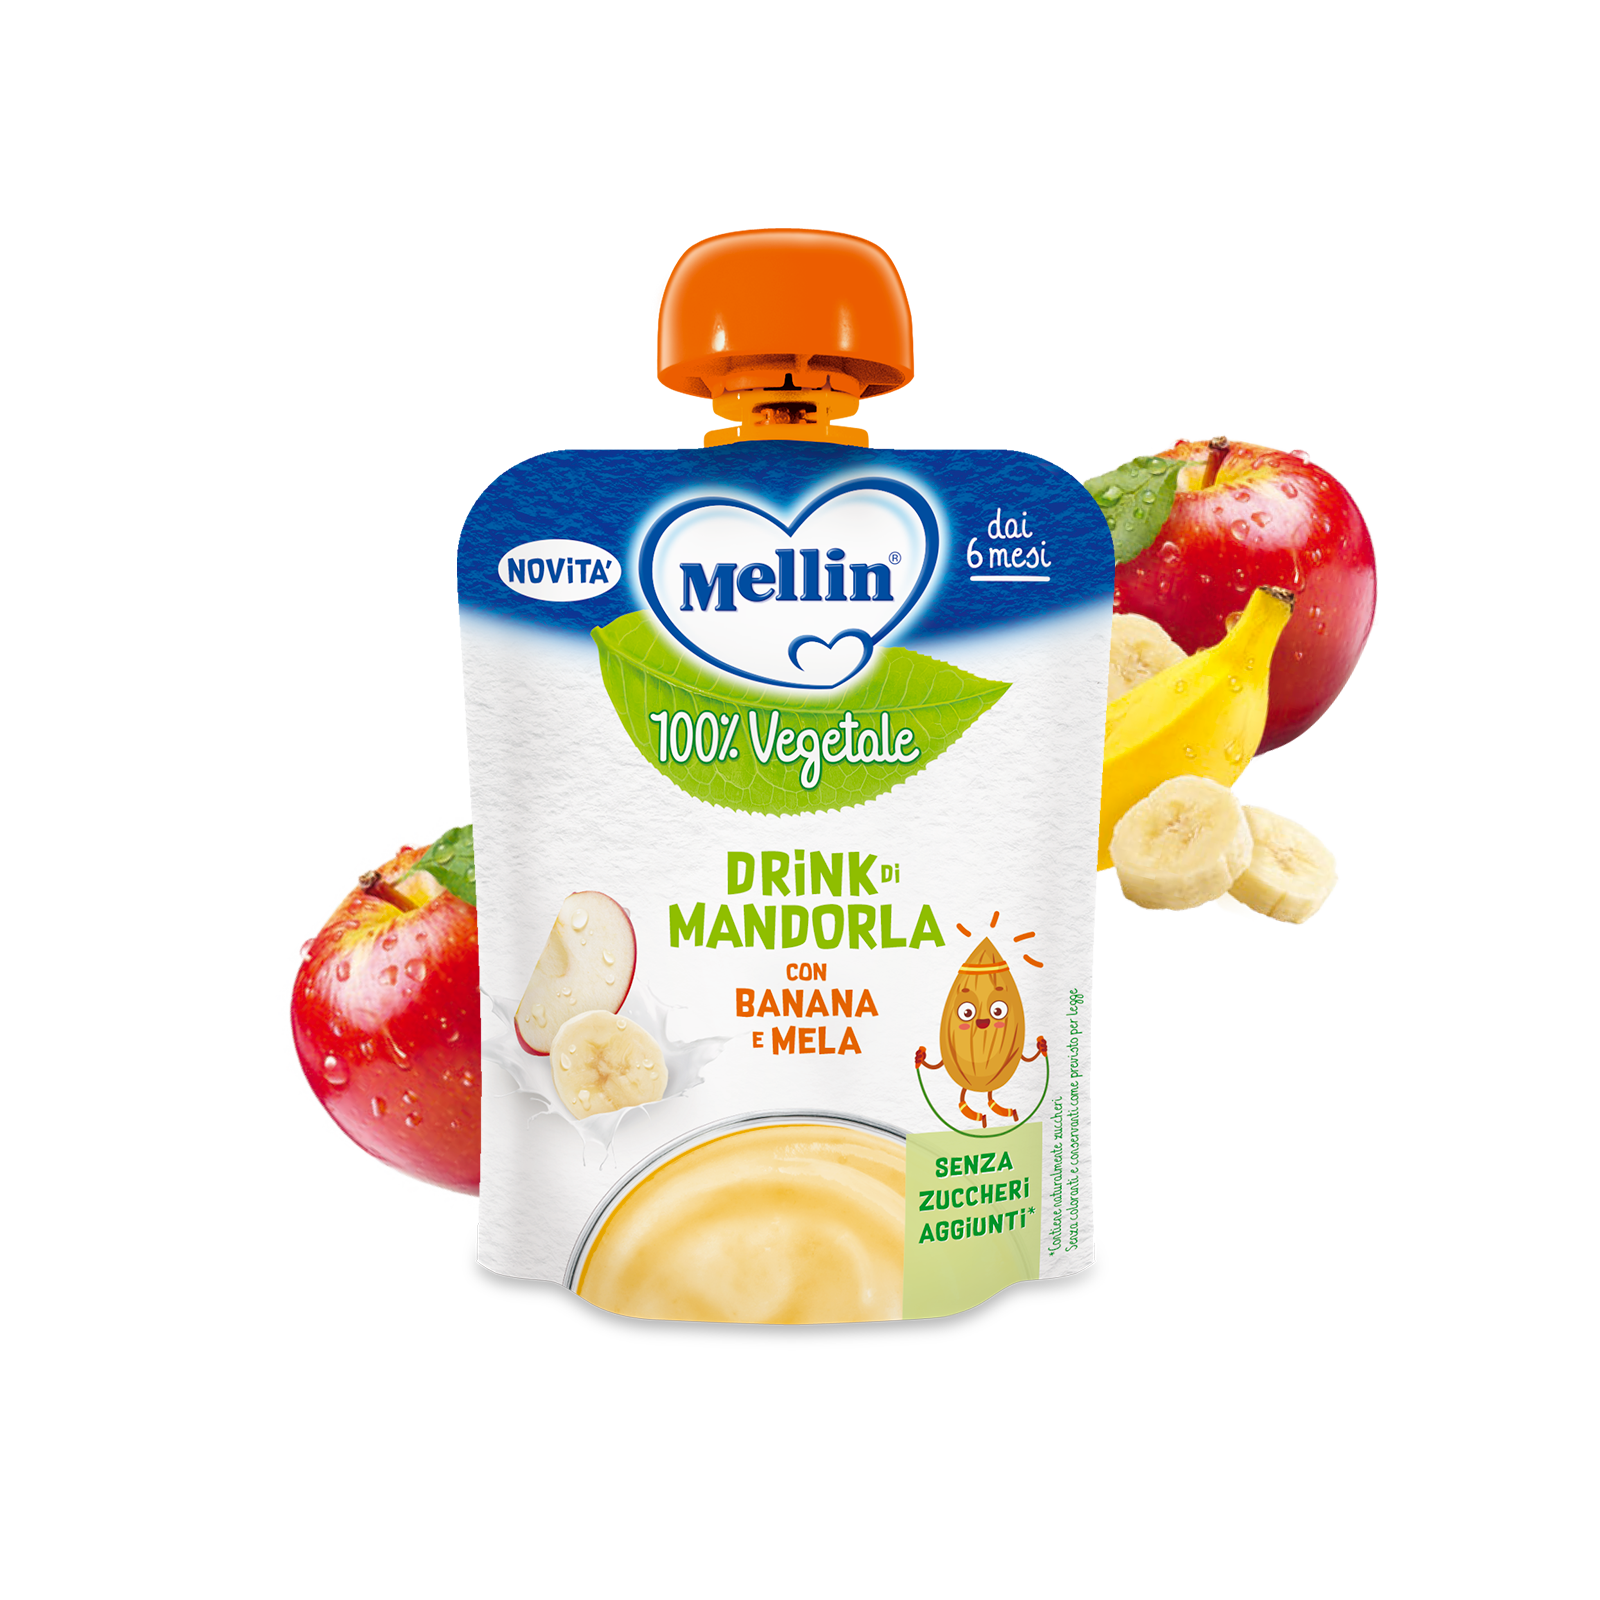 Merende Frutta - Merenda 100% Vegetale con drink di mandorla, banana e mela